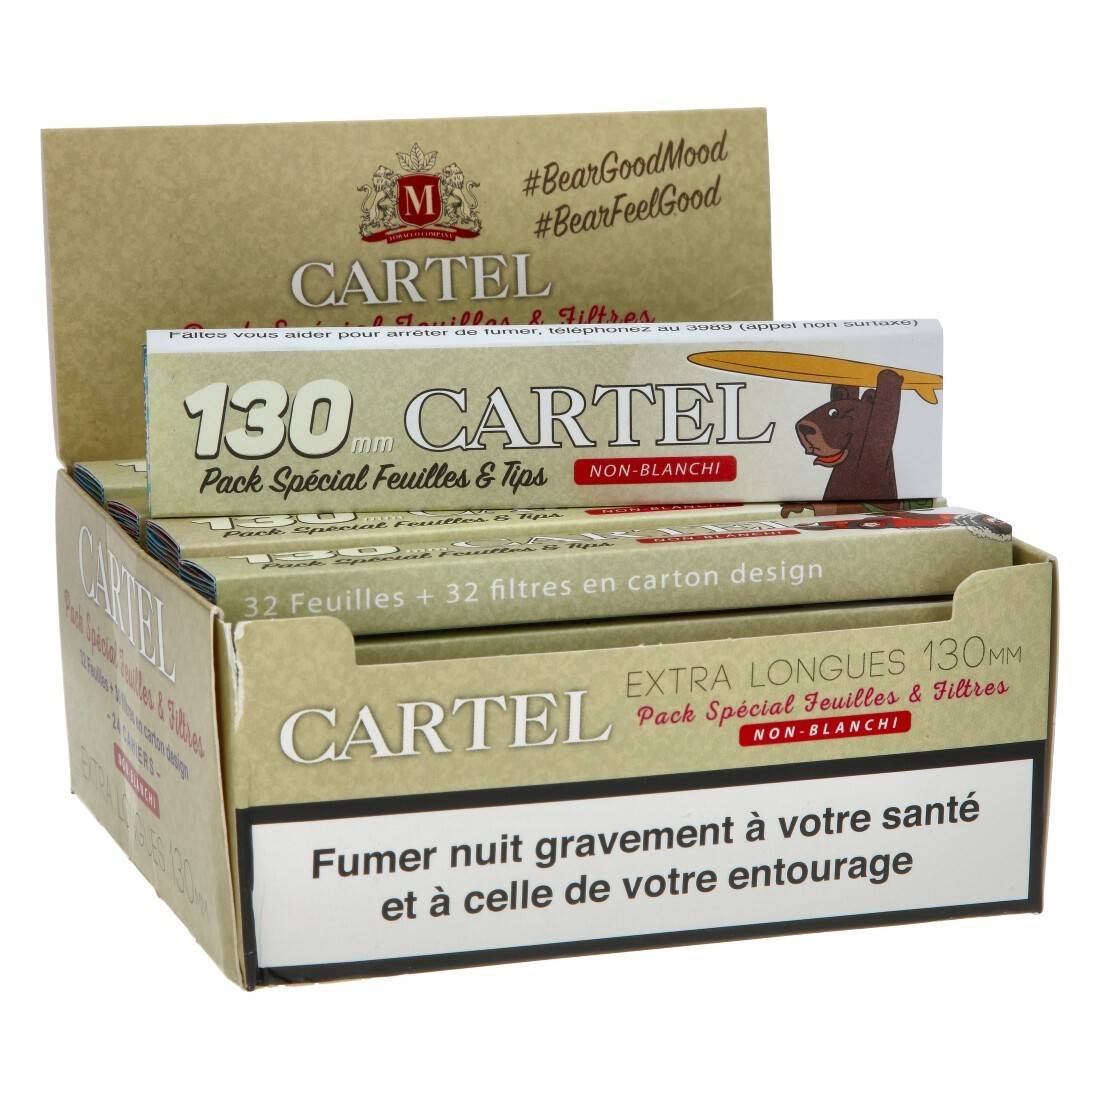 Carnet Cartel de 32 feuilles slim + tips 100% naturel, non blanchi